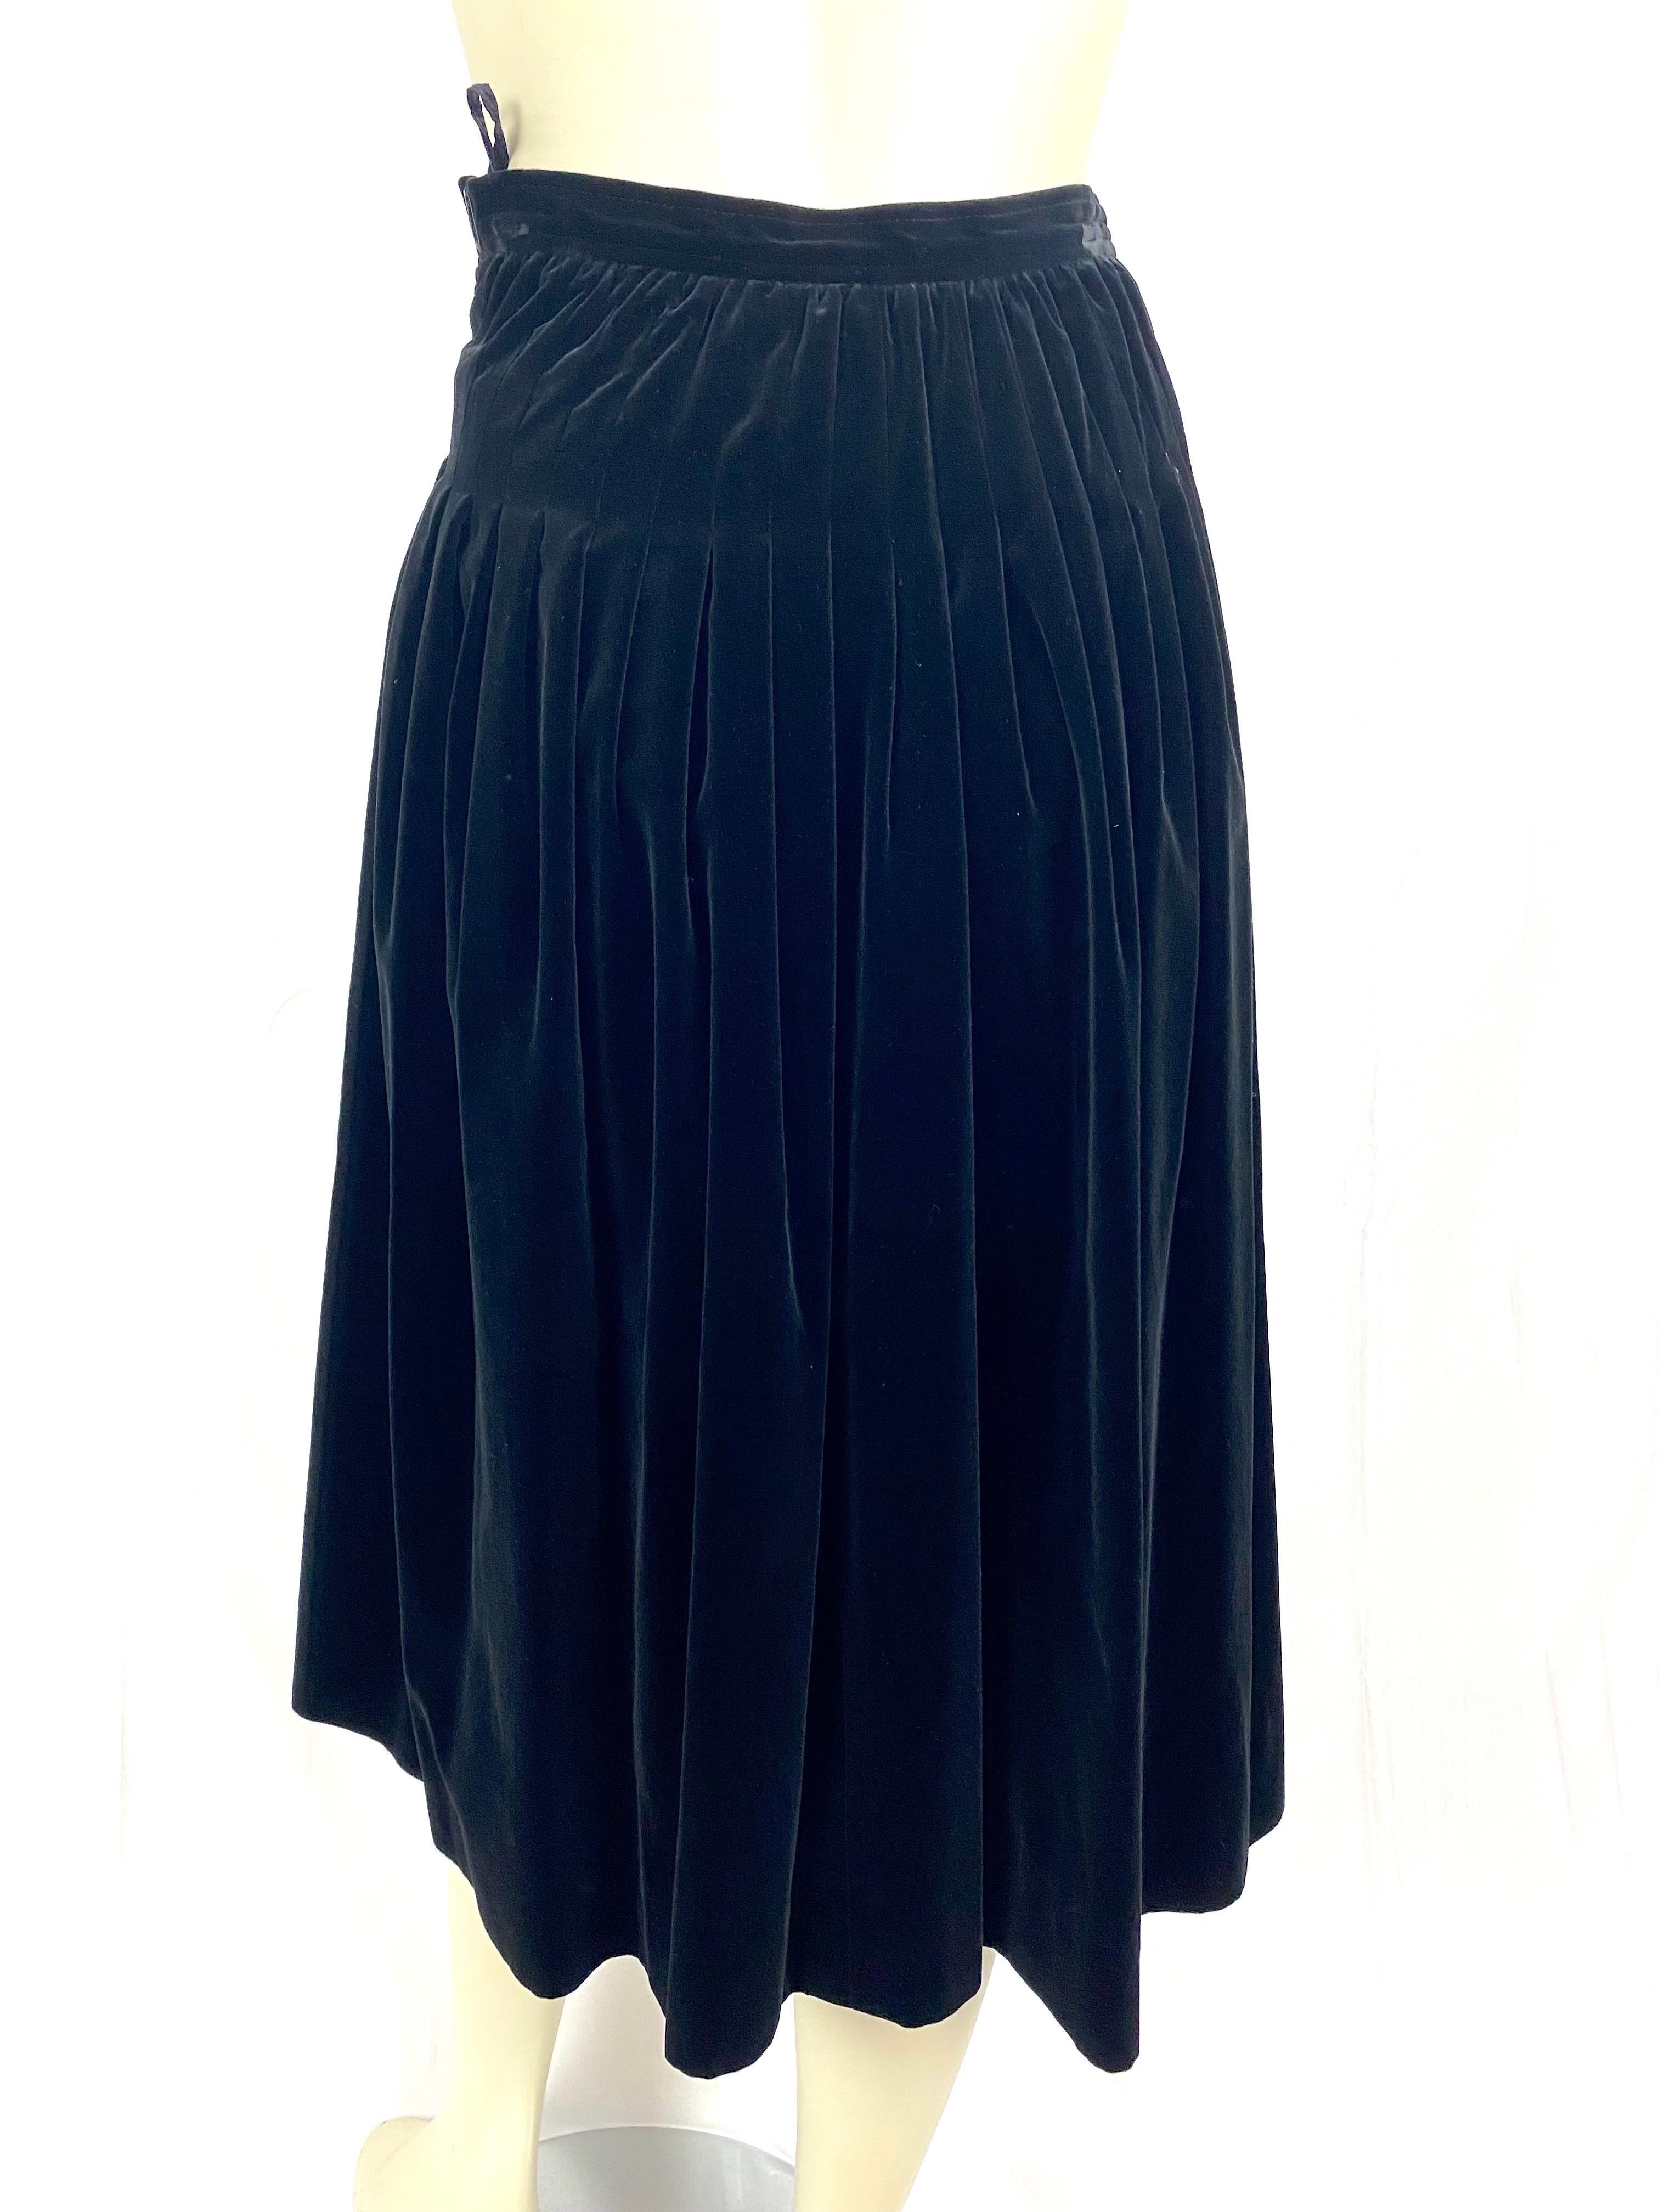 Vintage Yves saint laurent evening skirt from 1970 in black velvet In Good Condition For Sale In L'ESCALA, ES